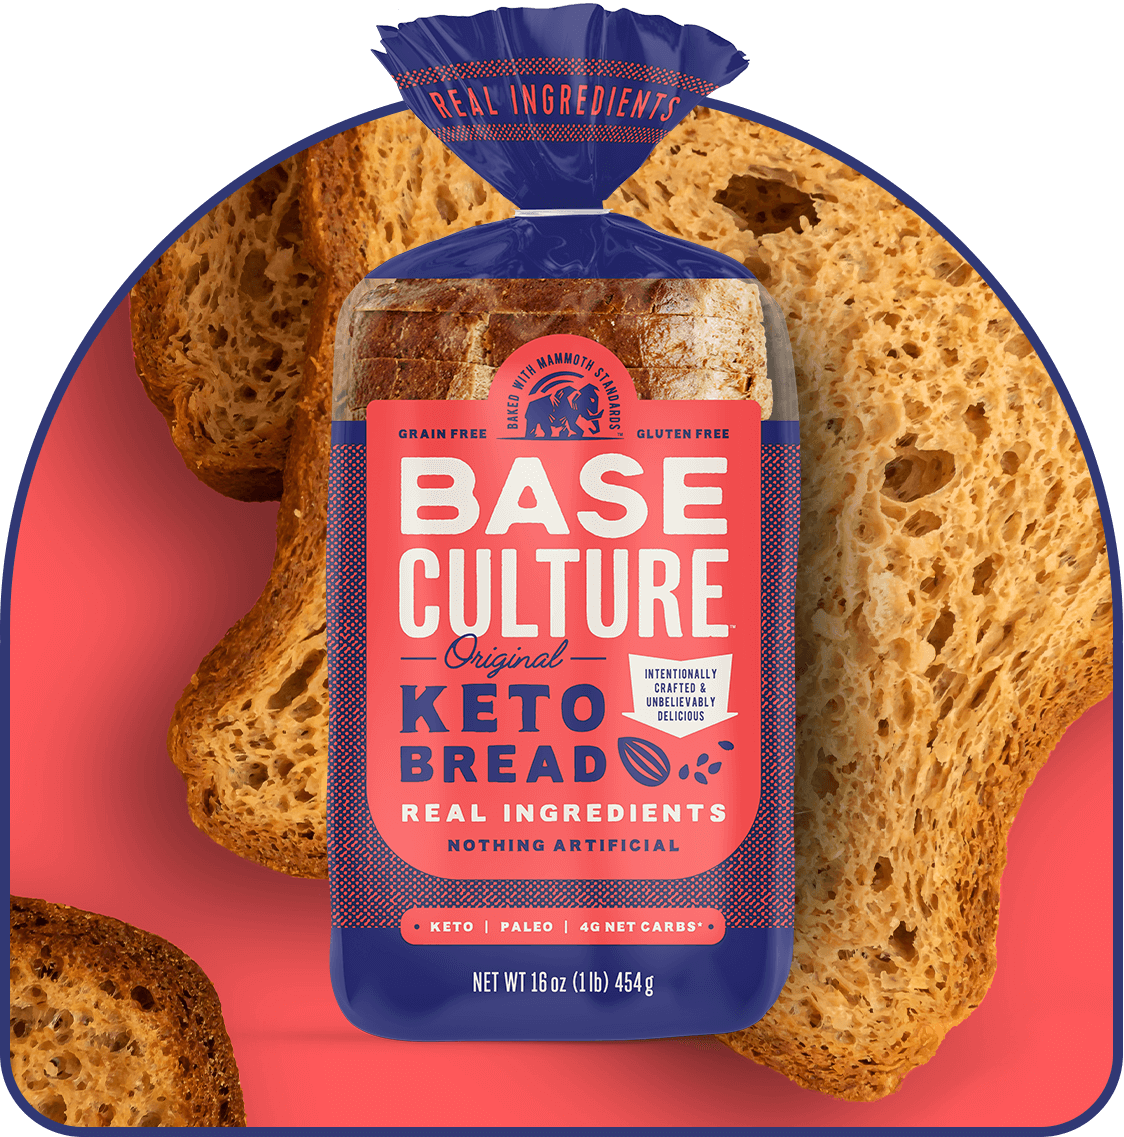 Original Keto Bread